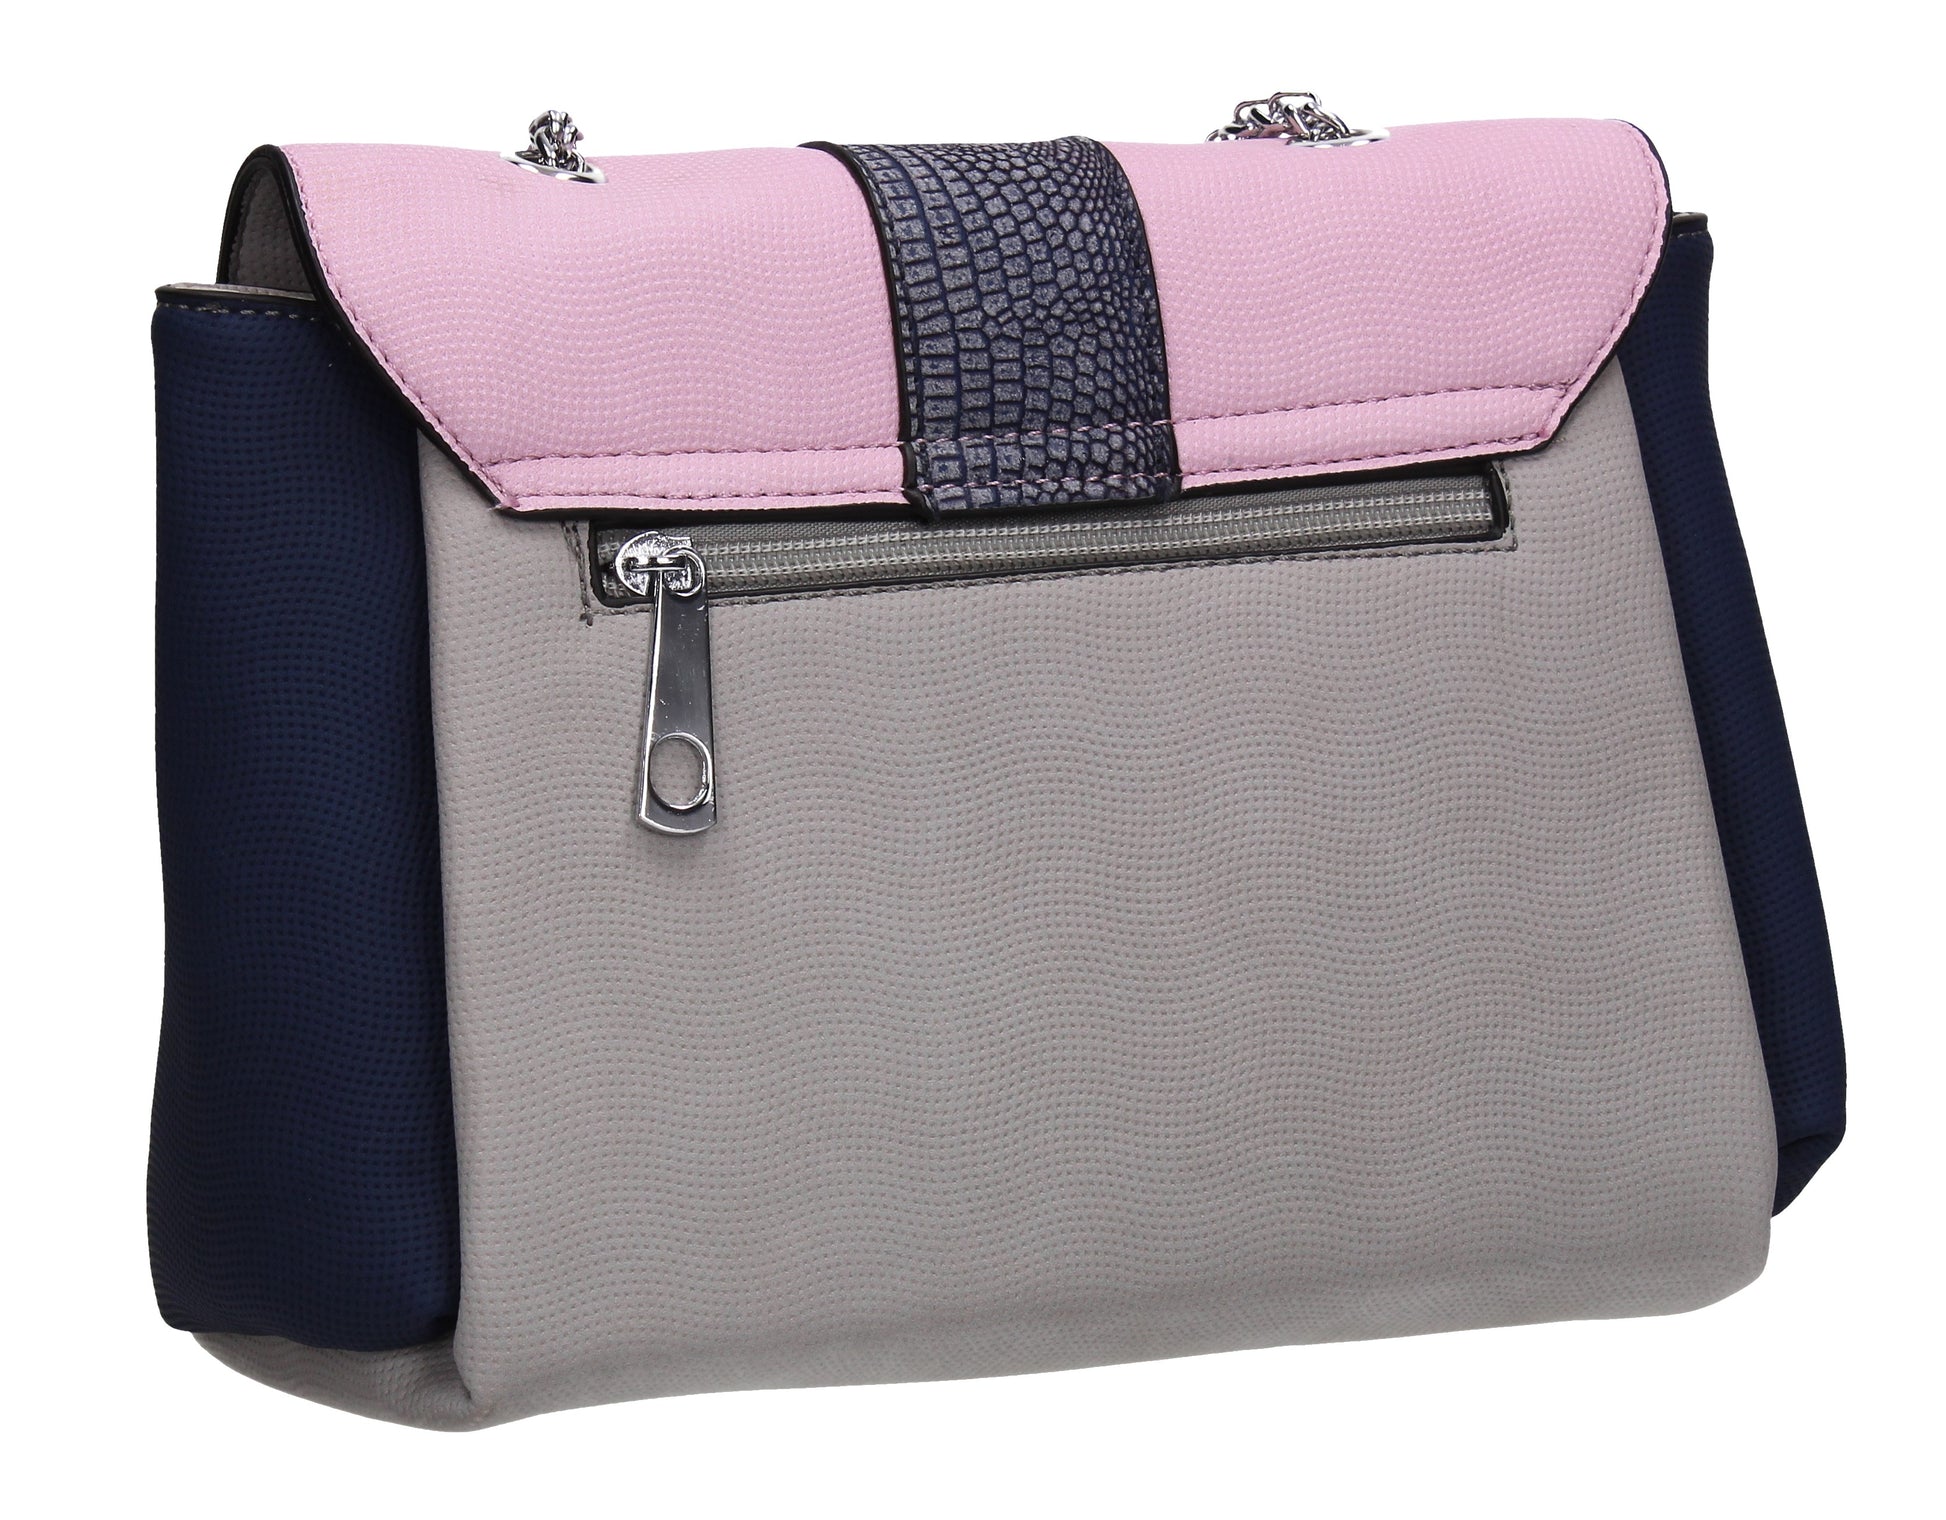 Sears Two Tone Handbag Meutral GreyBeautiful Cute Animal Faux Leather Clutch Bag Handles Strap Summer School